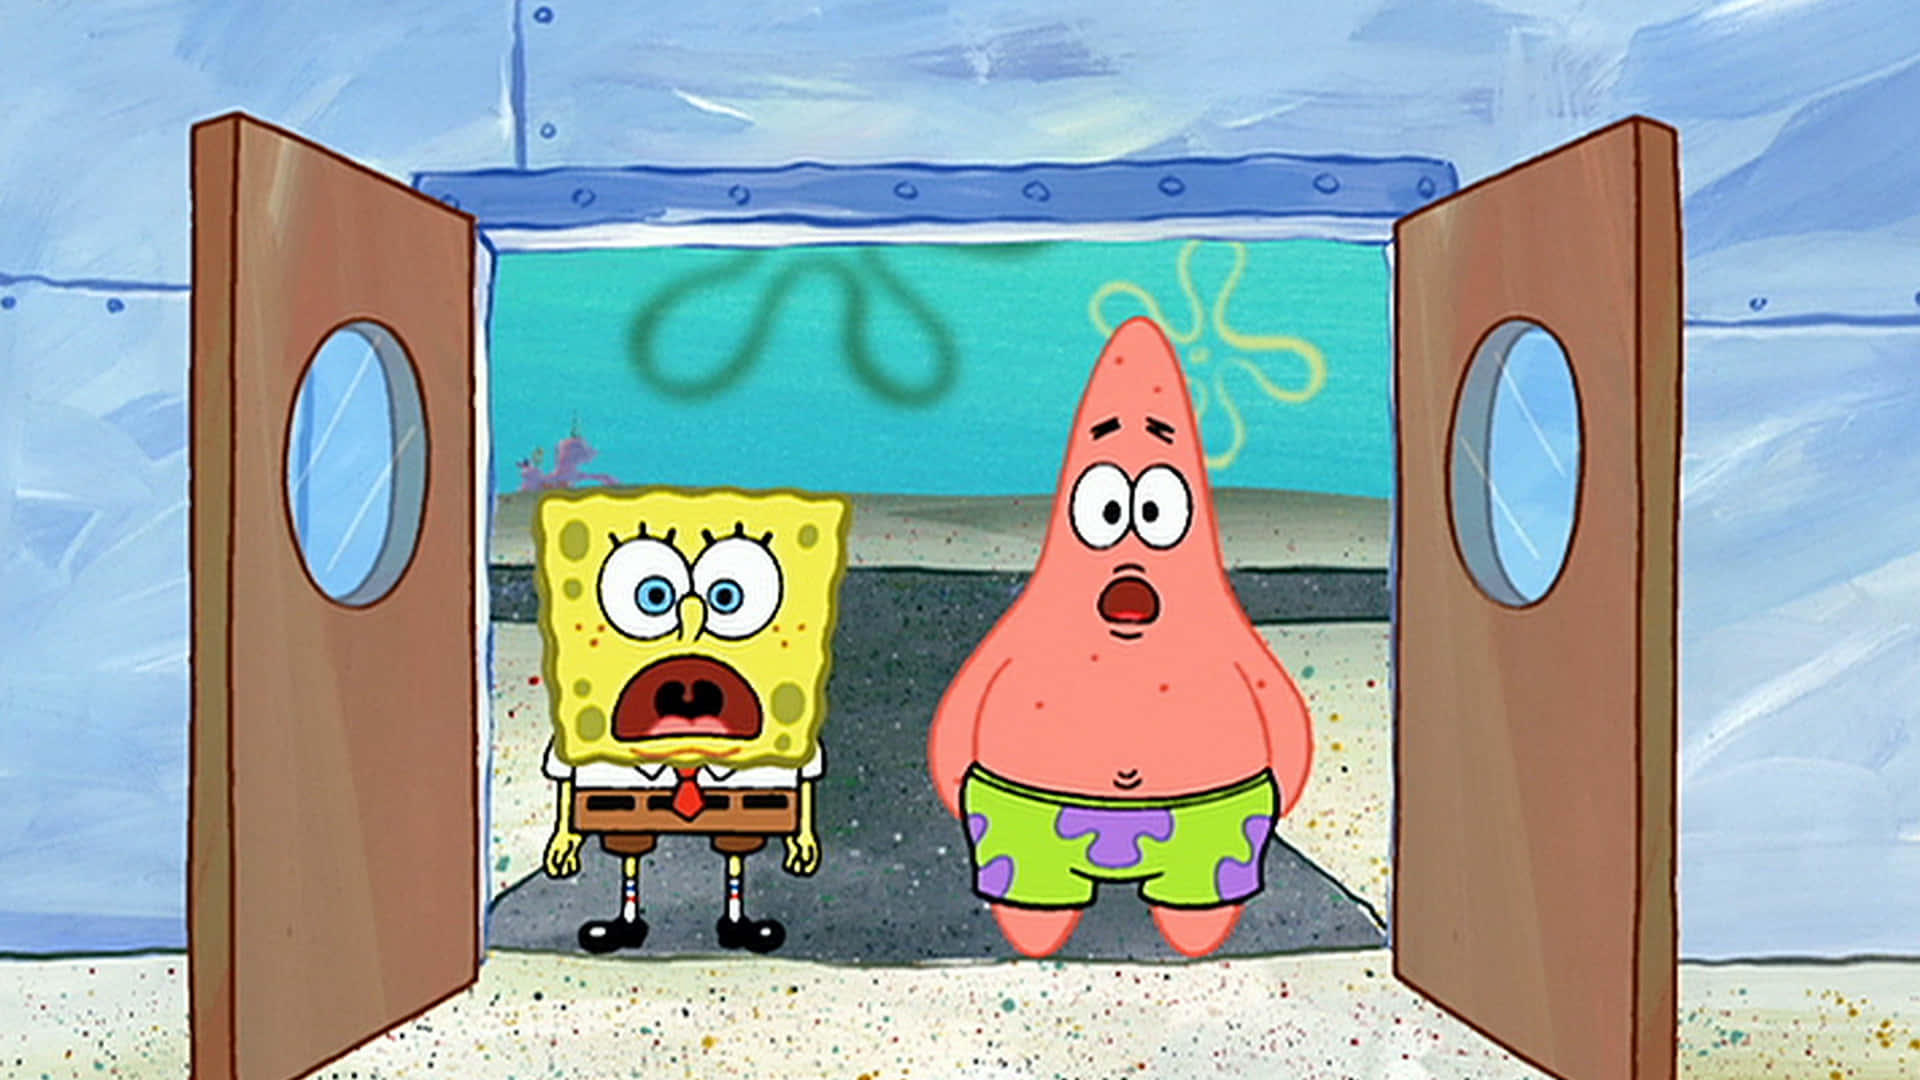 spongebob shocked